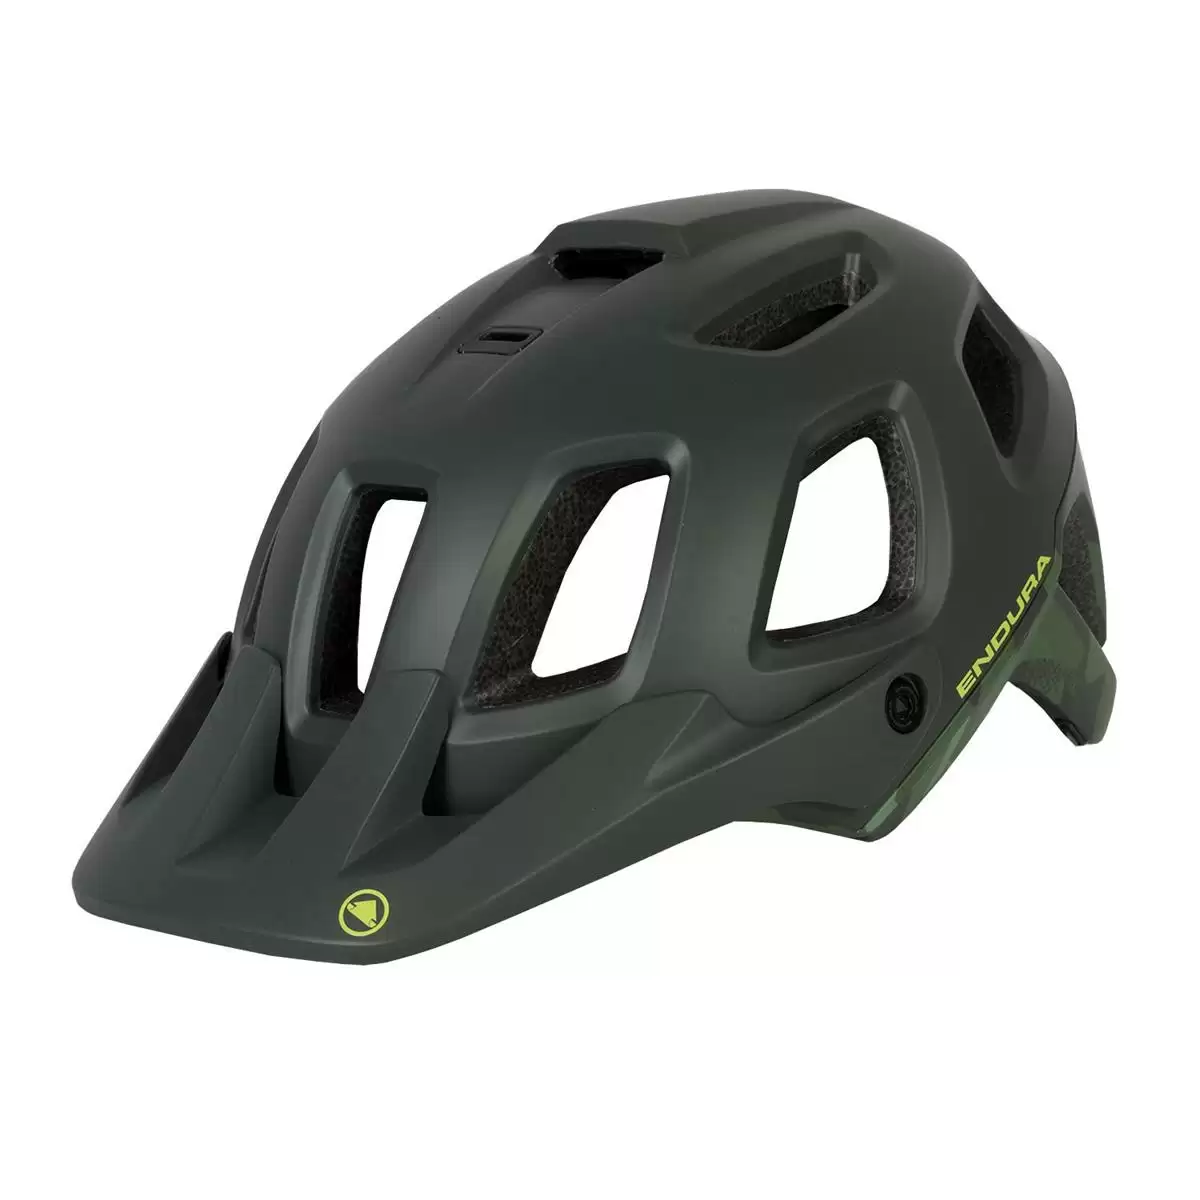 Casco SingleTrack Helmet II verde taglia S/M (51-56cm) - image